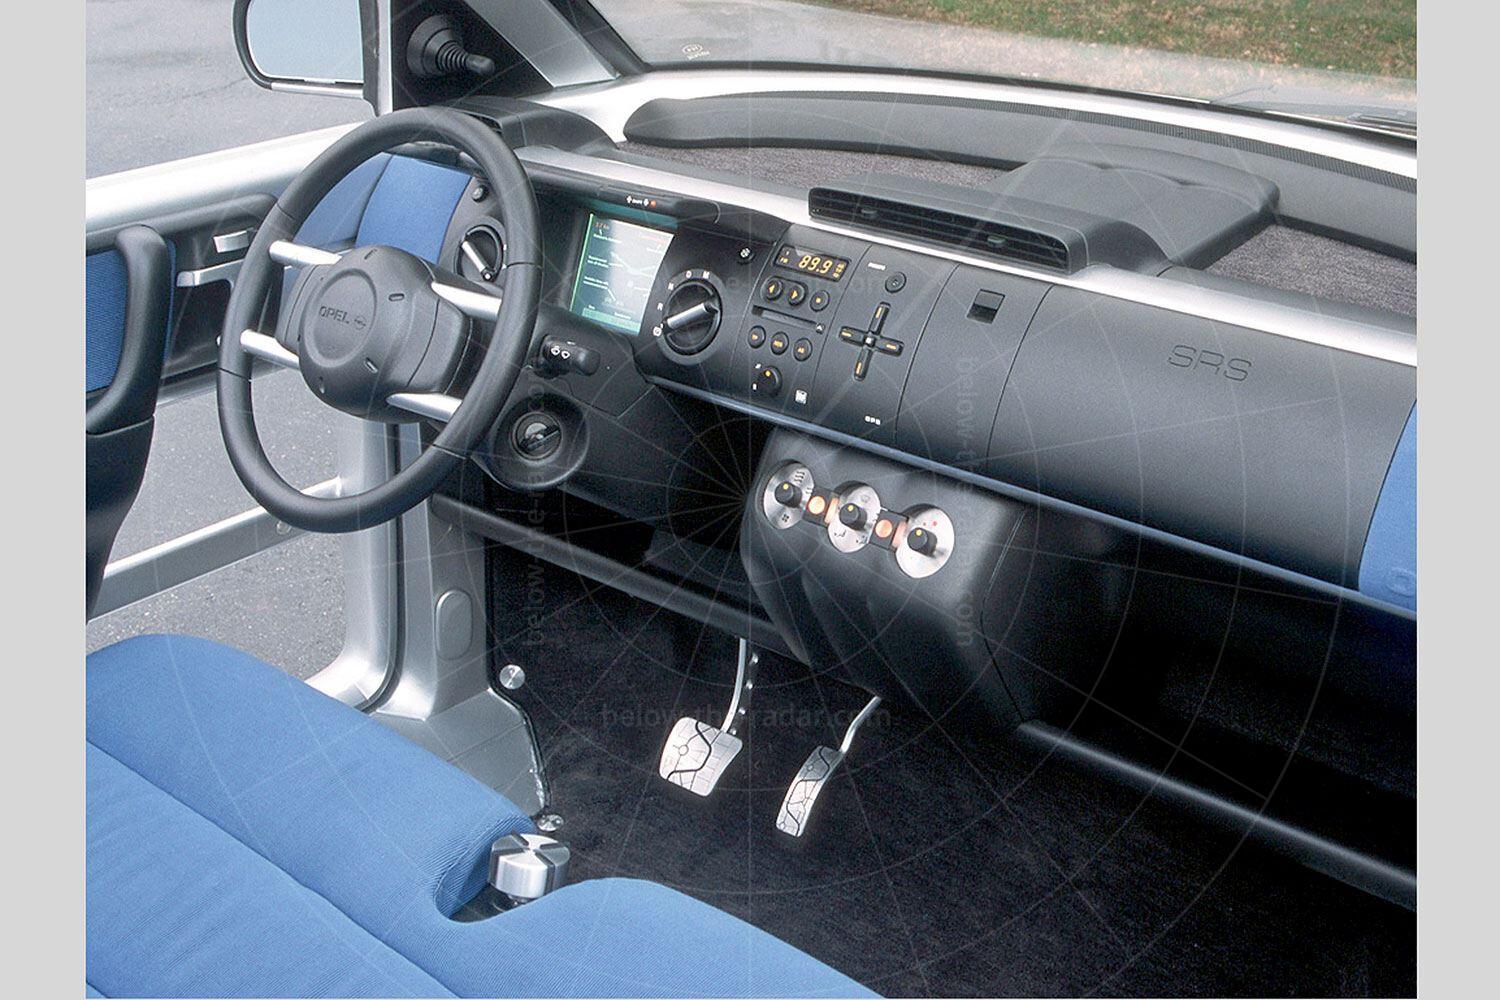 Opel Maxx four-door interior Pic: GM | Opel Maxx four-door interior